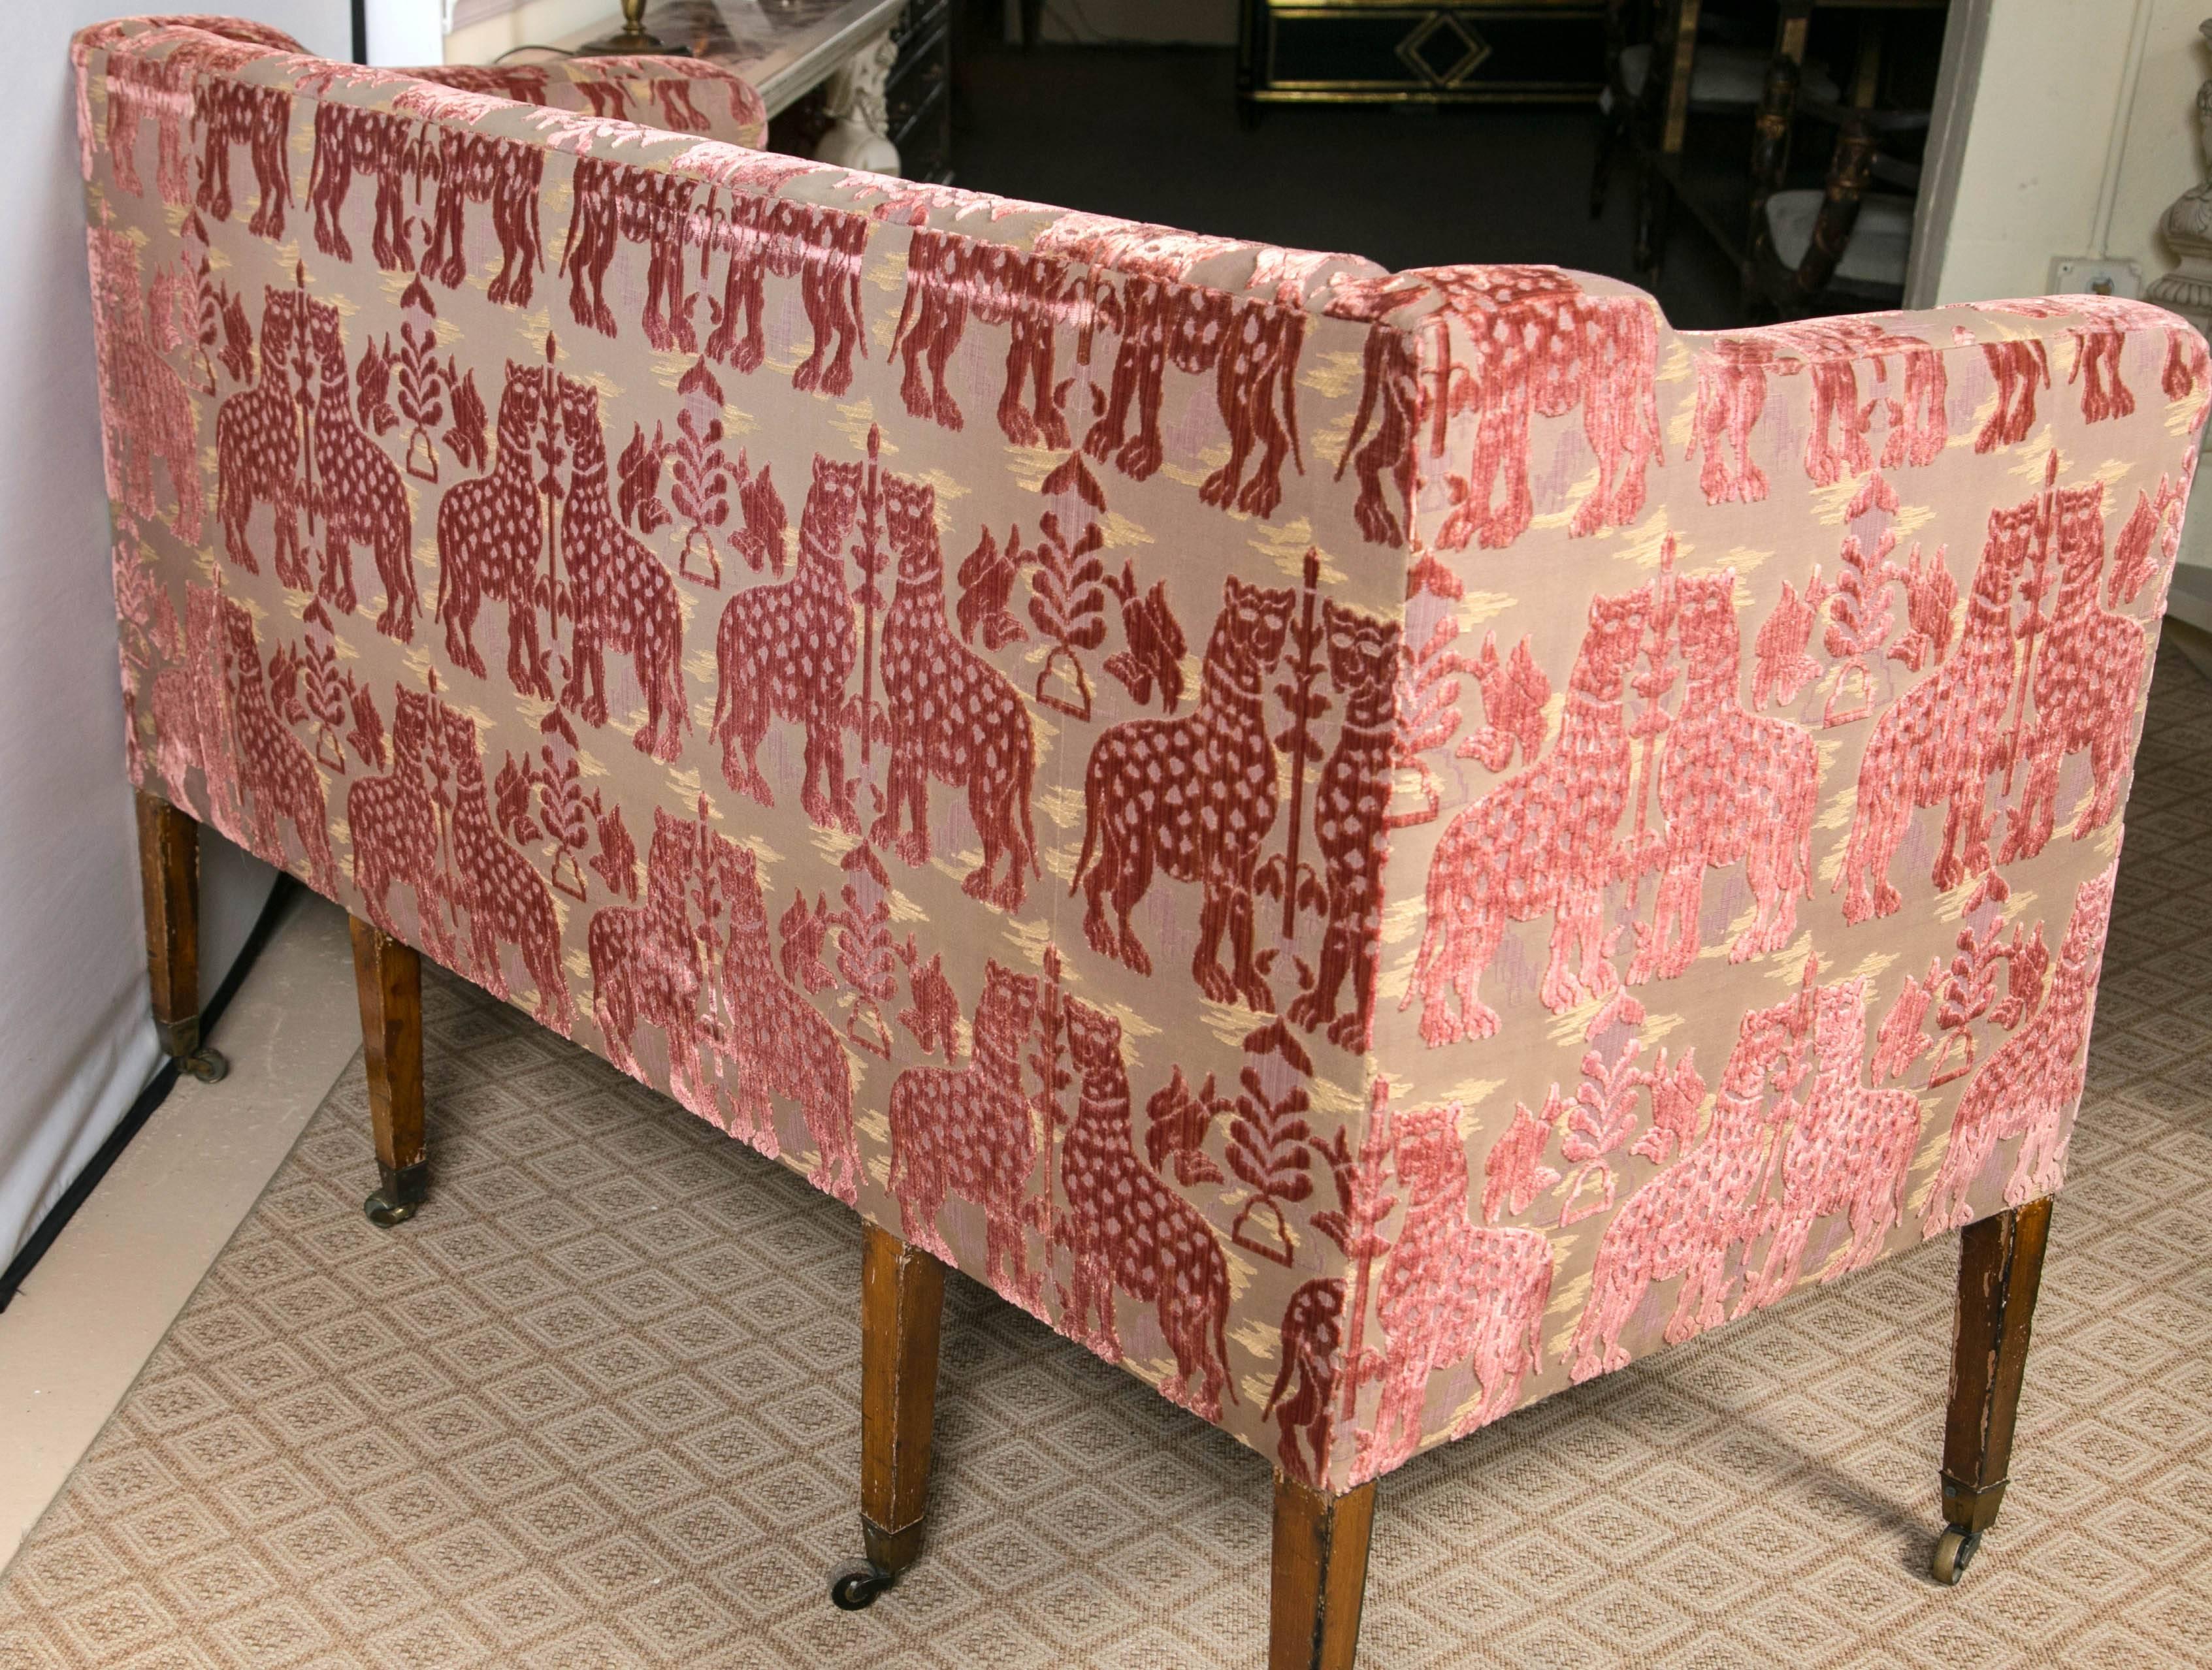 19th Century Adams Style Settee with Giraffe Upholstery 3